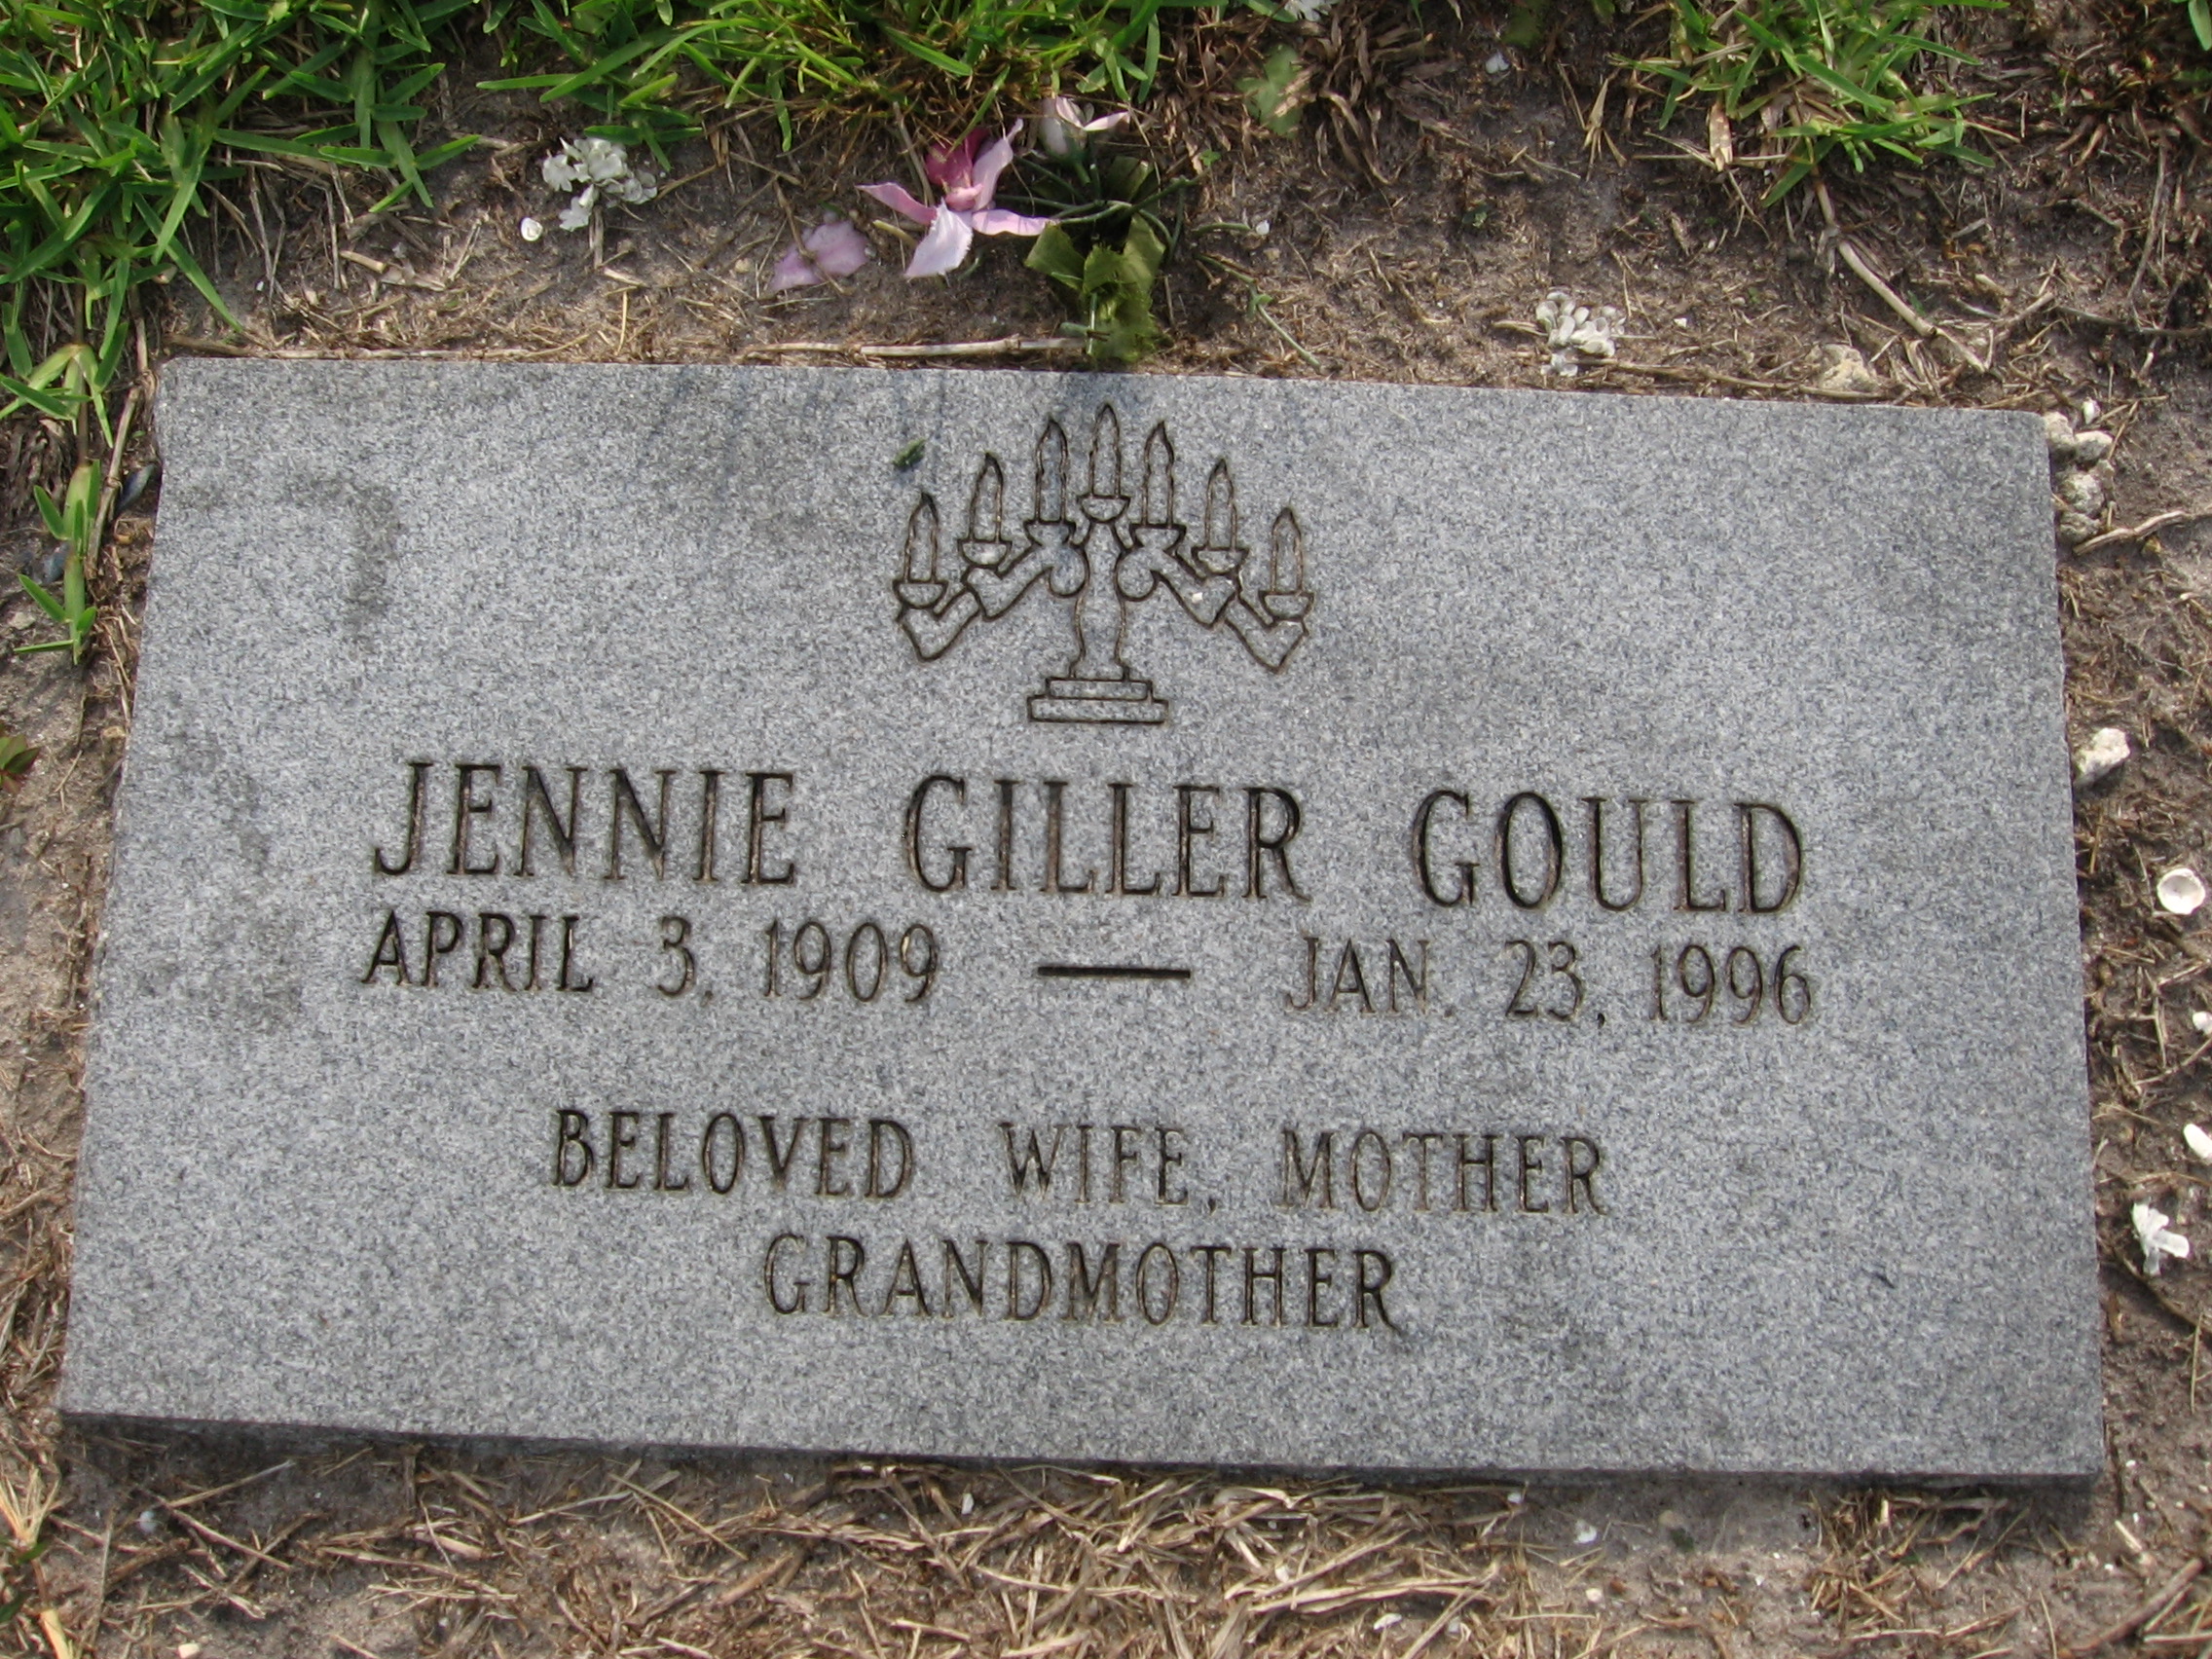 Jennie Giller Gould